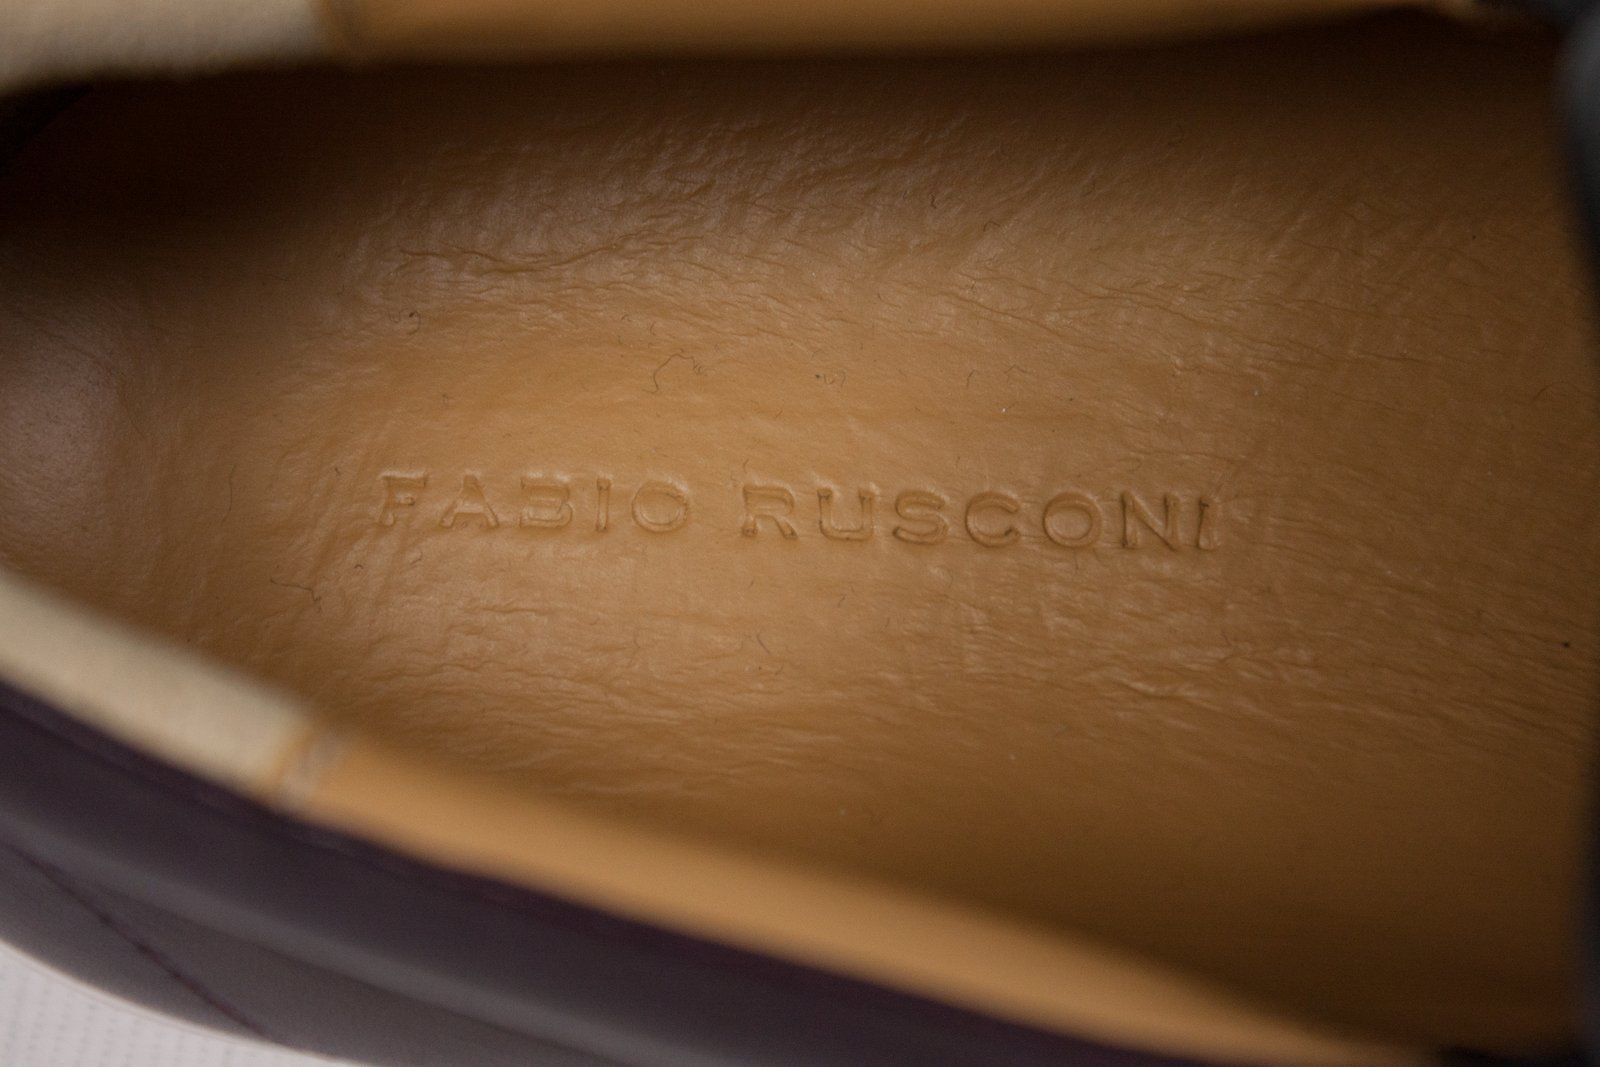 FABIO RUSCONI Burgundy Leather Slip On Shoes, US9, EU39, UK6 - secondfirst